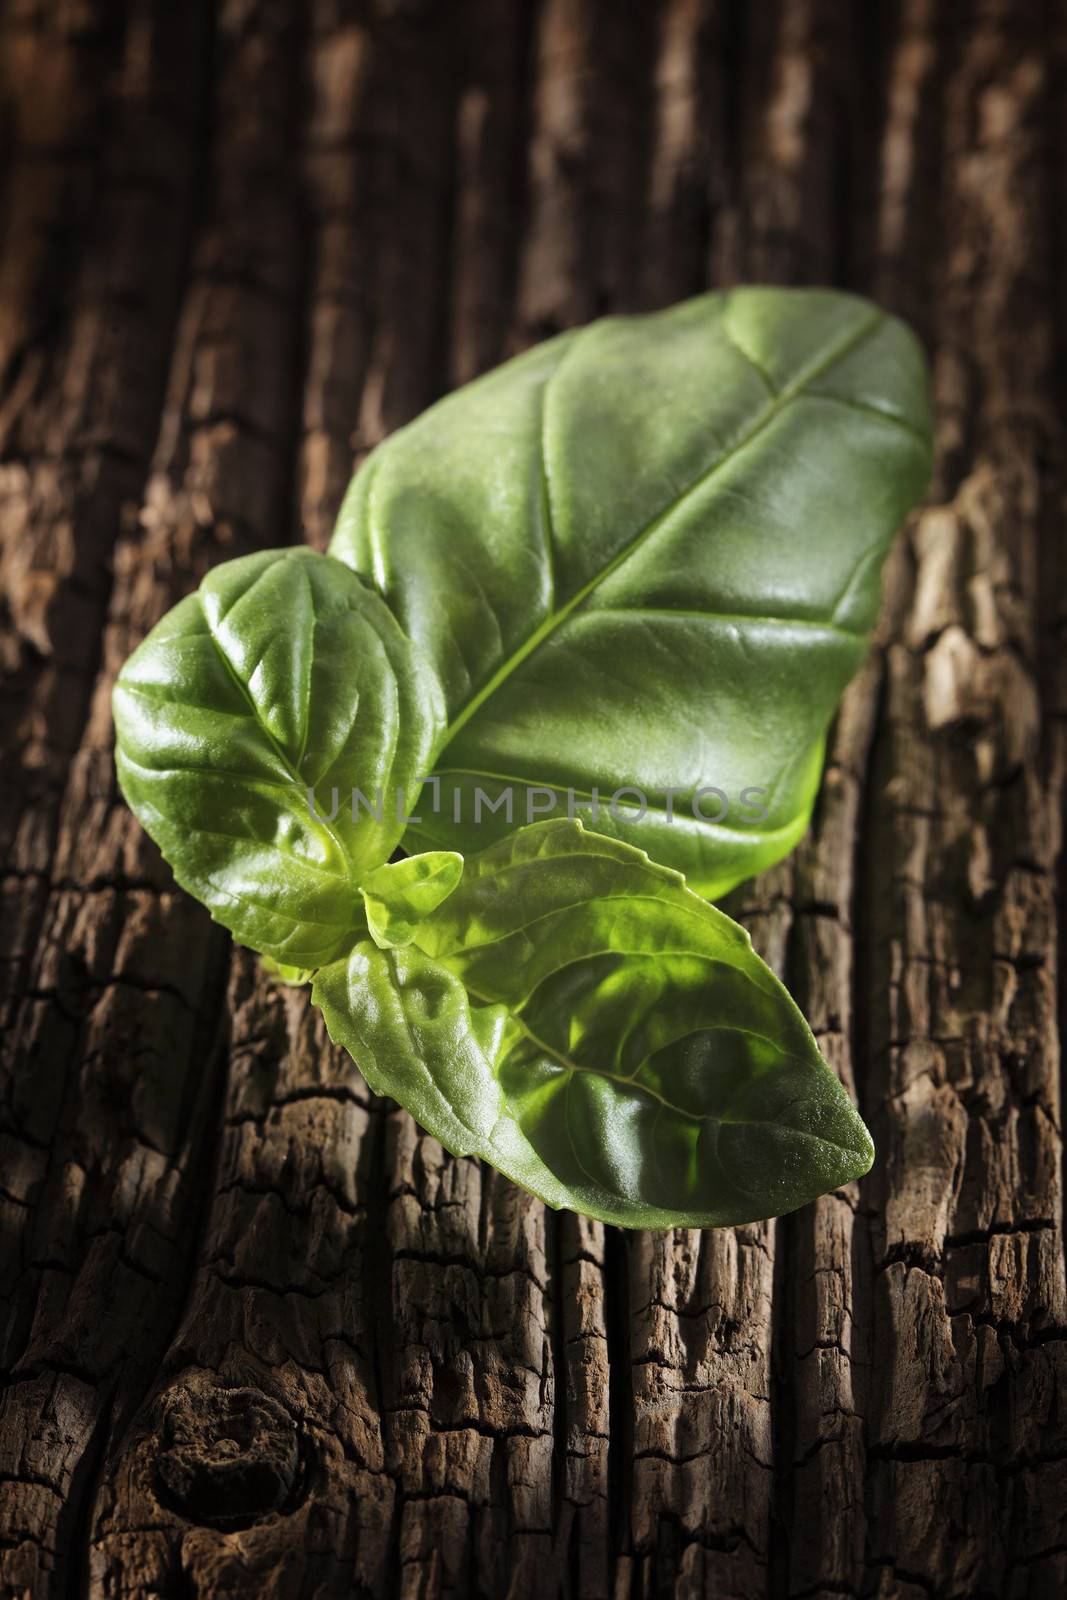 Basil leaves on wooden background. Short depth-of-field.